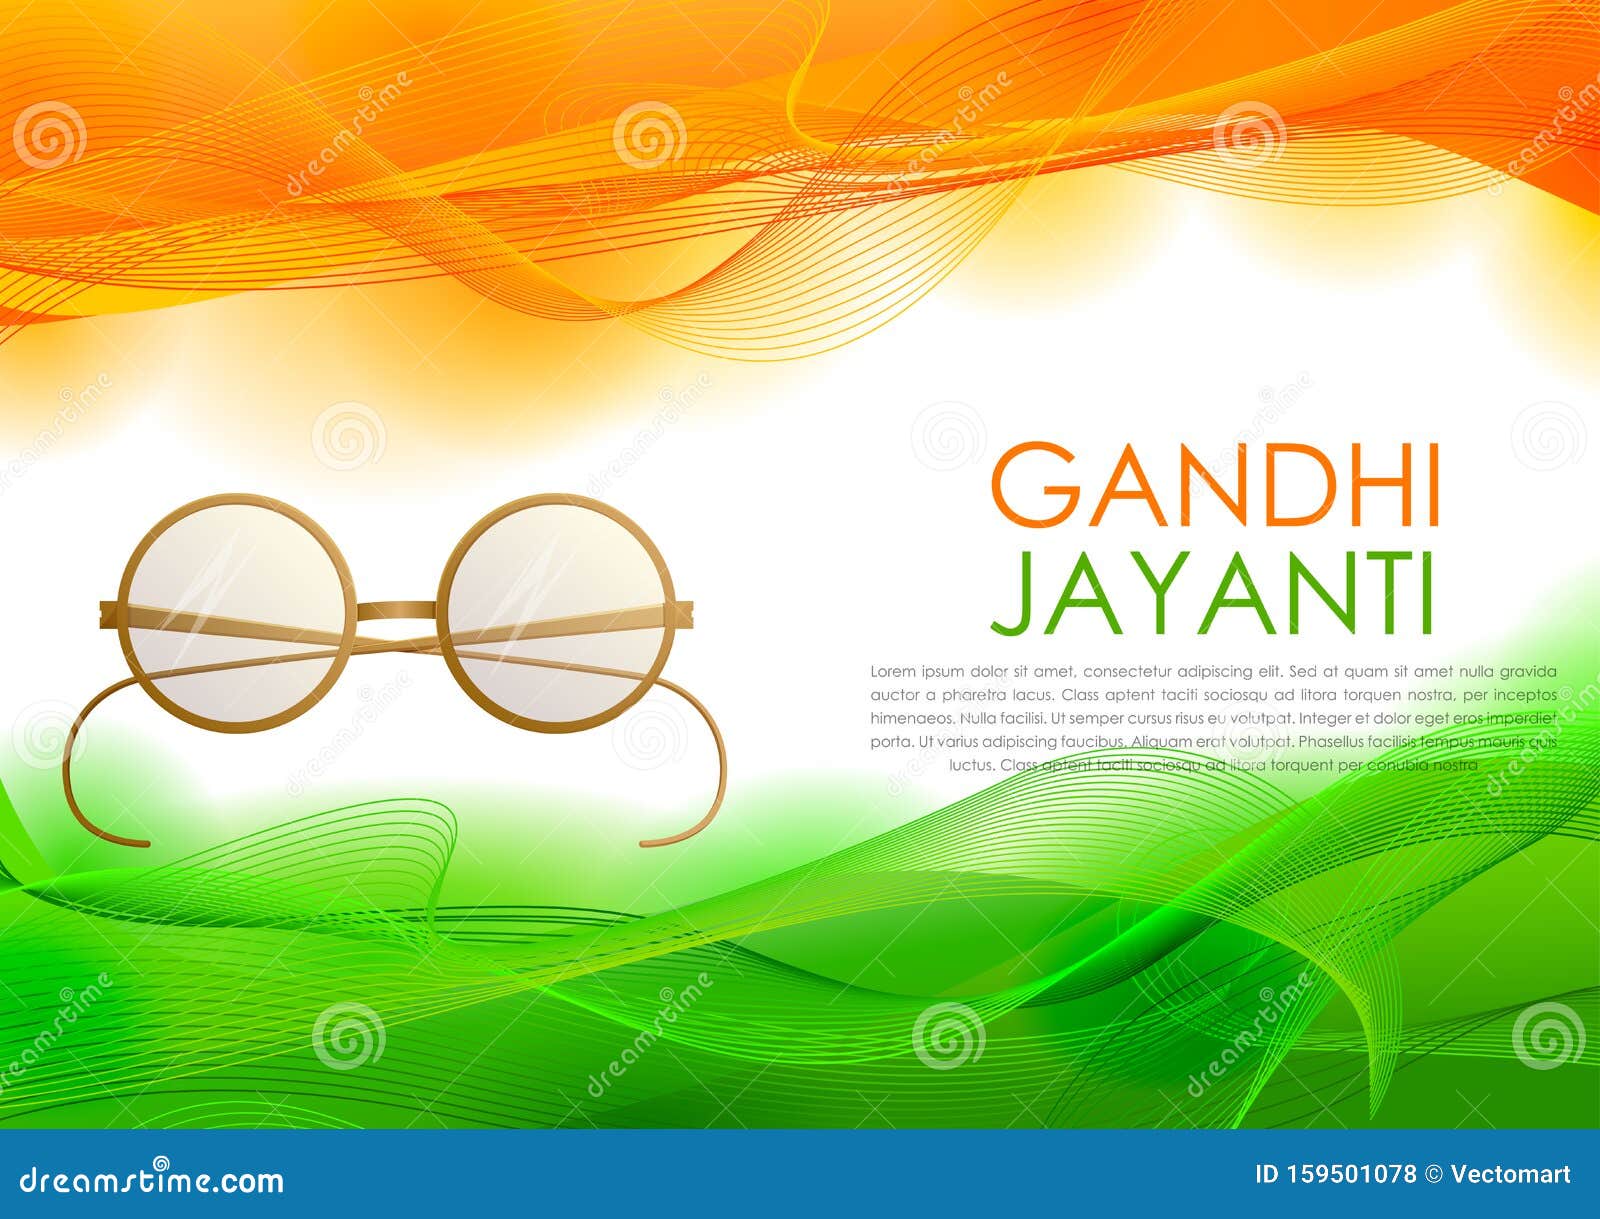 India Background with Nation Hero and Freedom Fighter Mahatma Gandhi for Gandhi  Jayanti Stock Vector - Illustration of gandhi, banner: 159501078